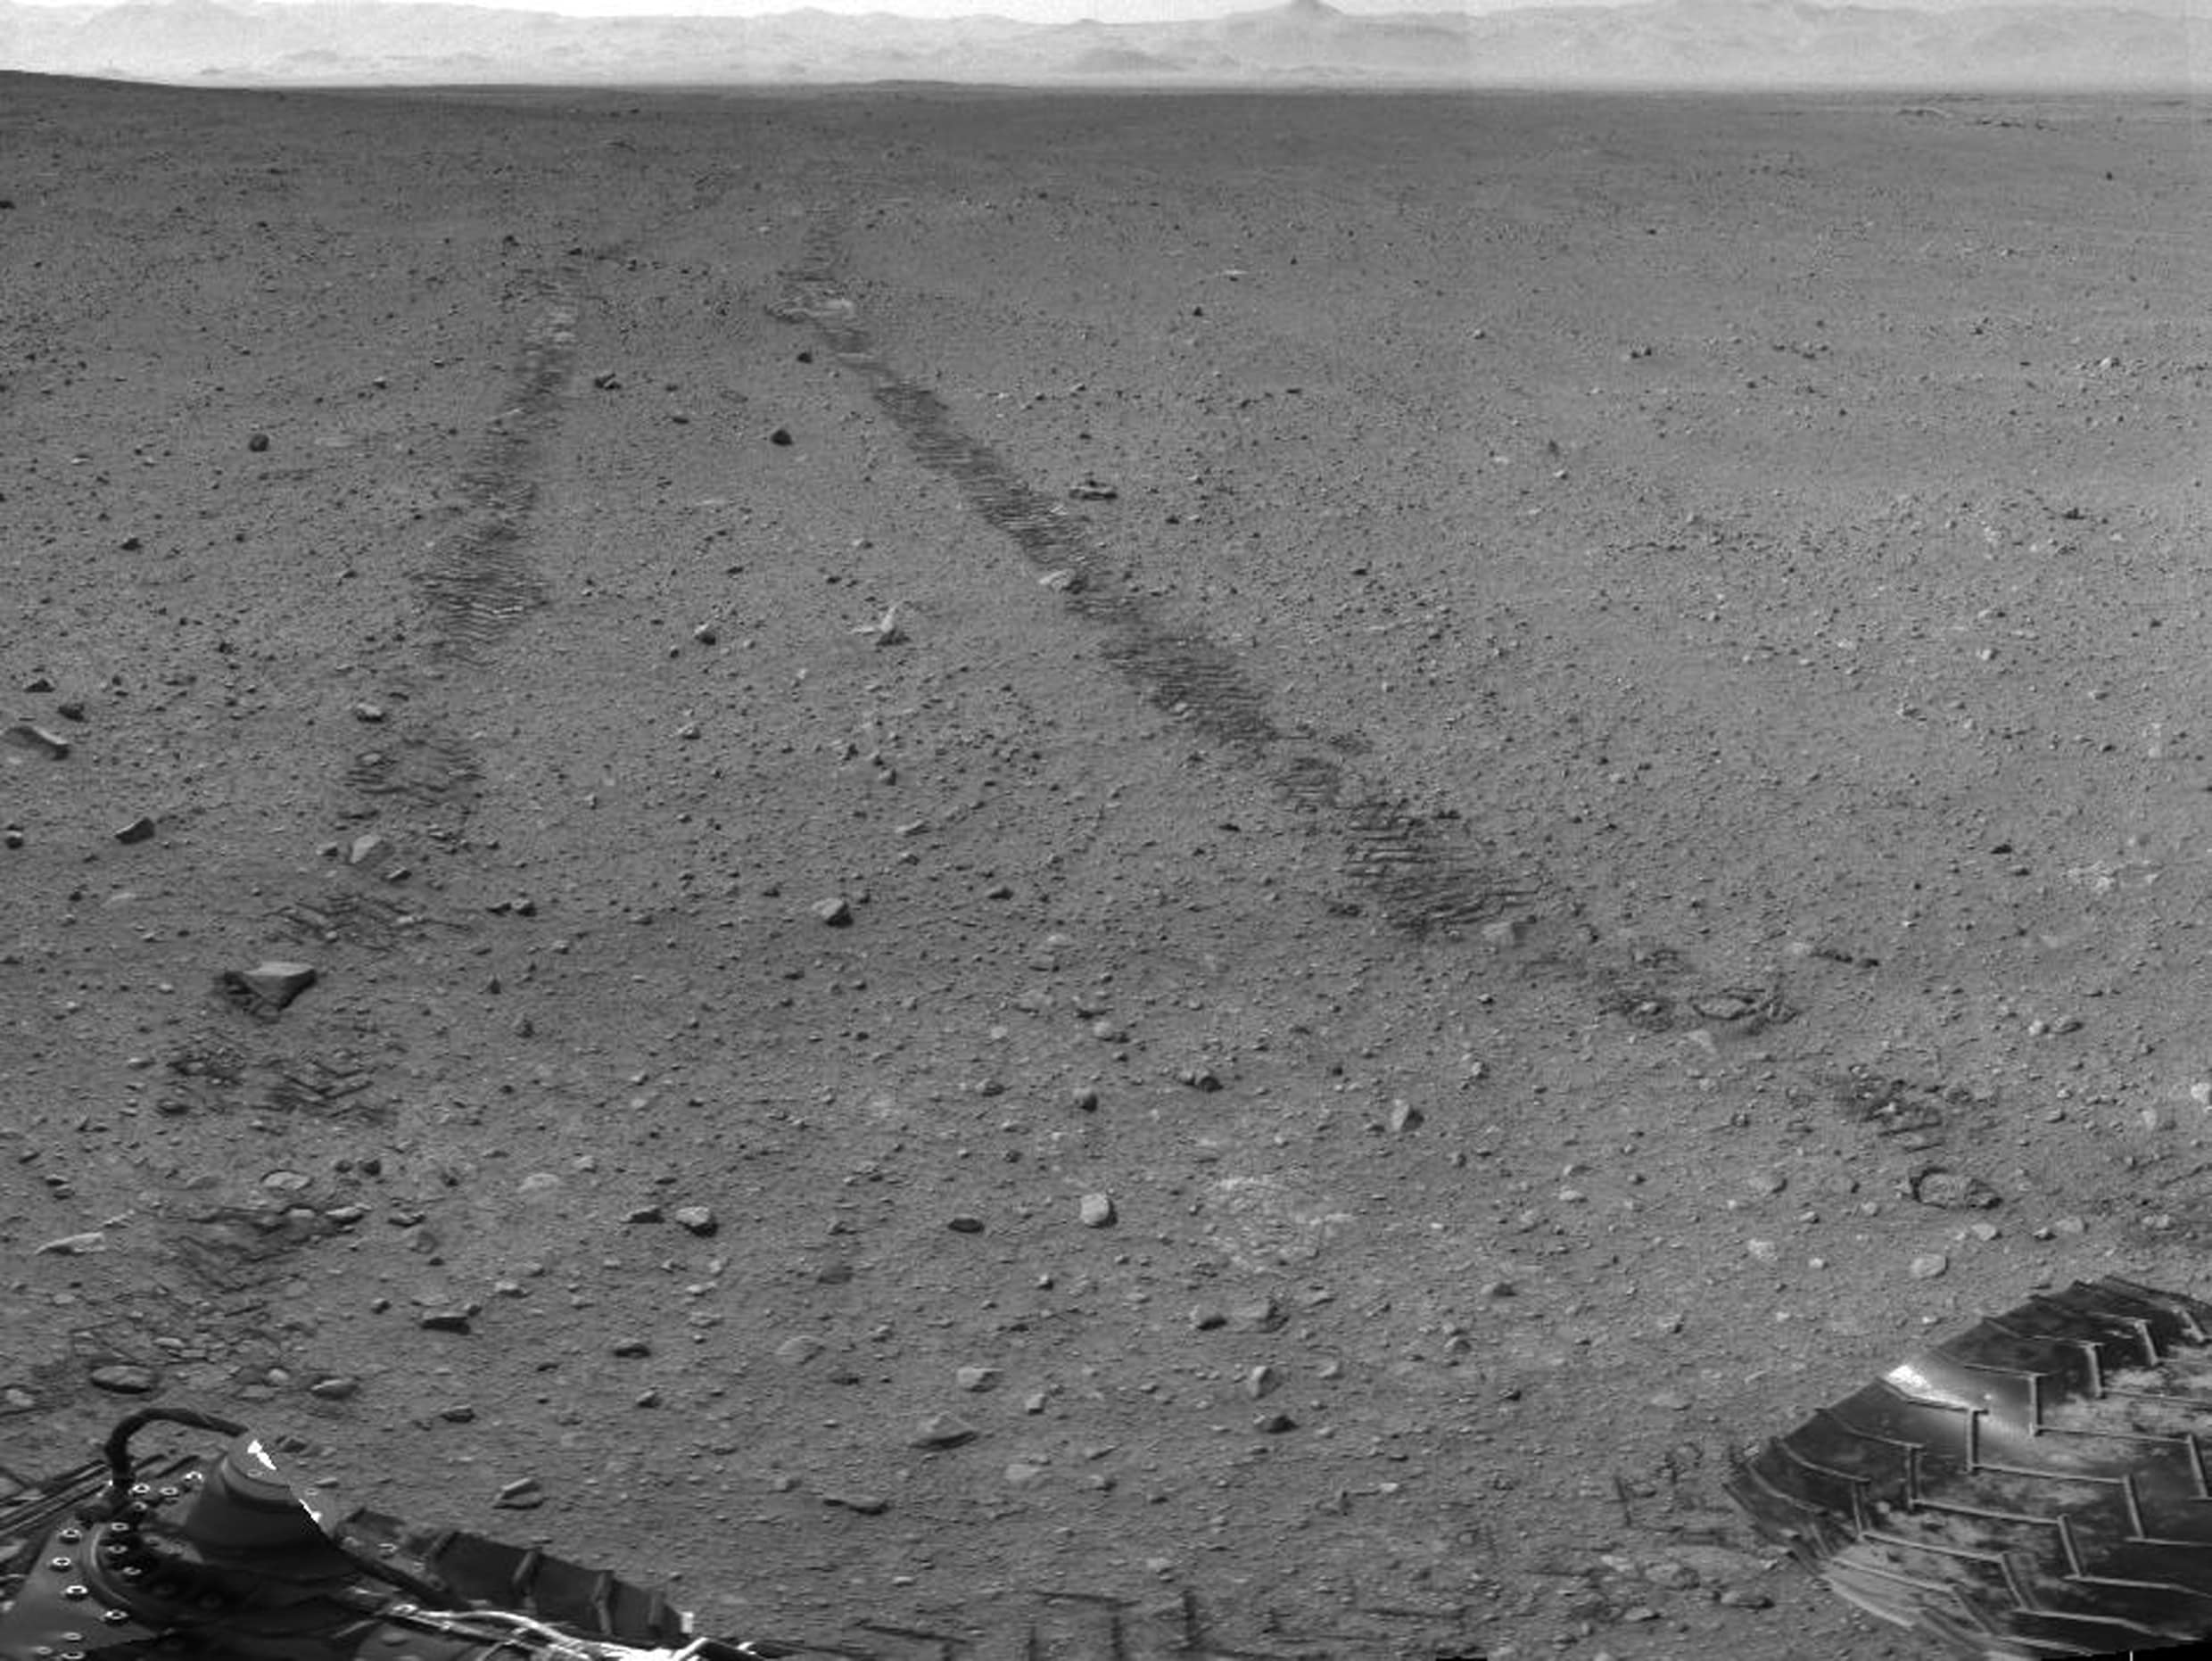 Rover Curiosity vindt intrigerend glimmend object op Mars